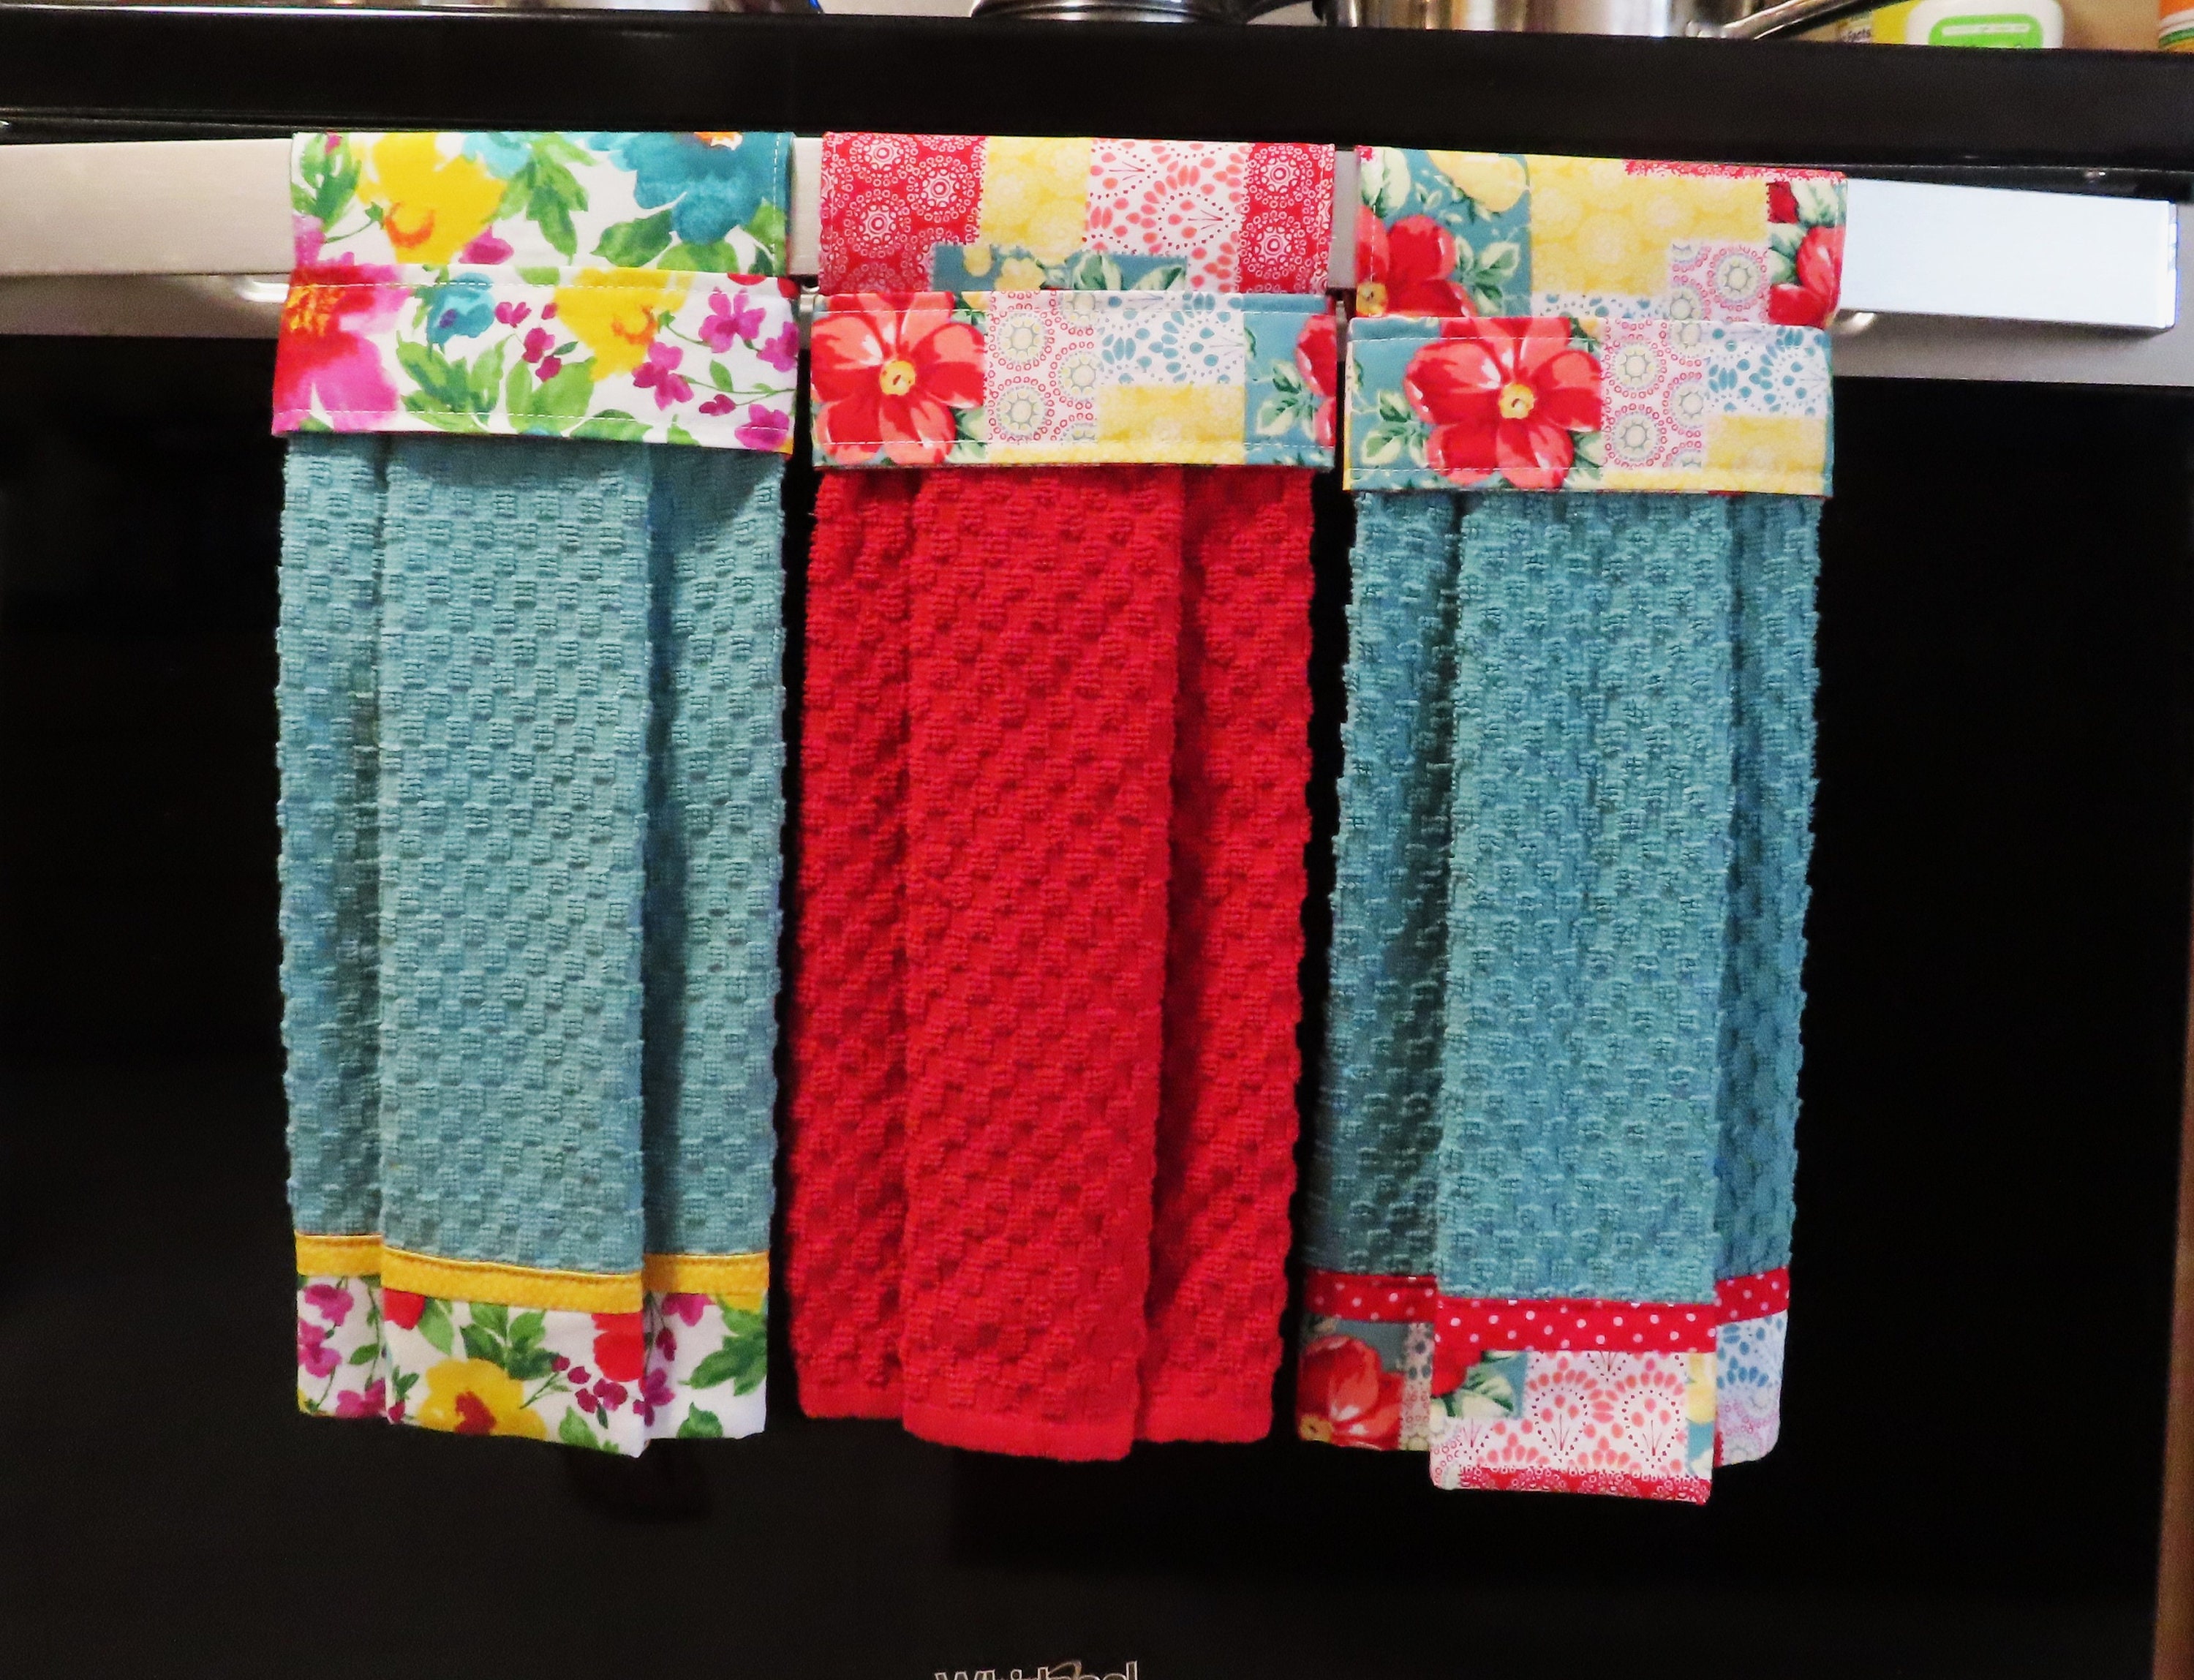 Pioneer Woman Prints Crocheted Top Kitchen Towels 